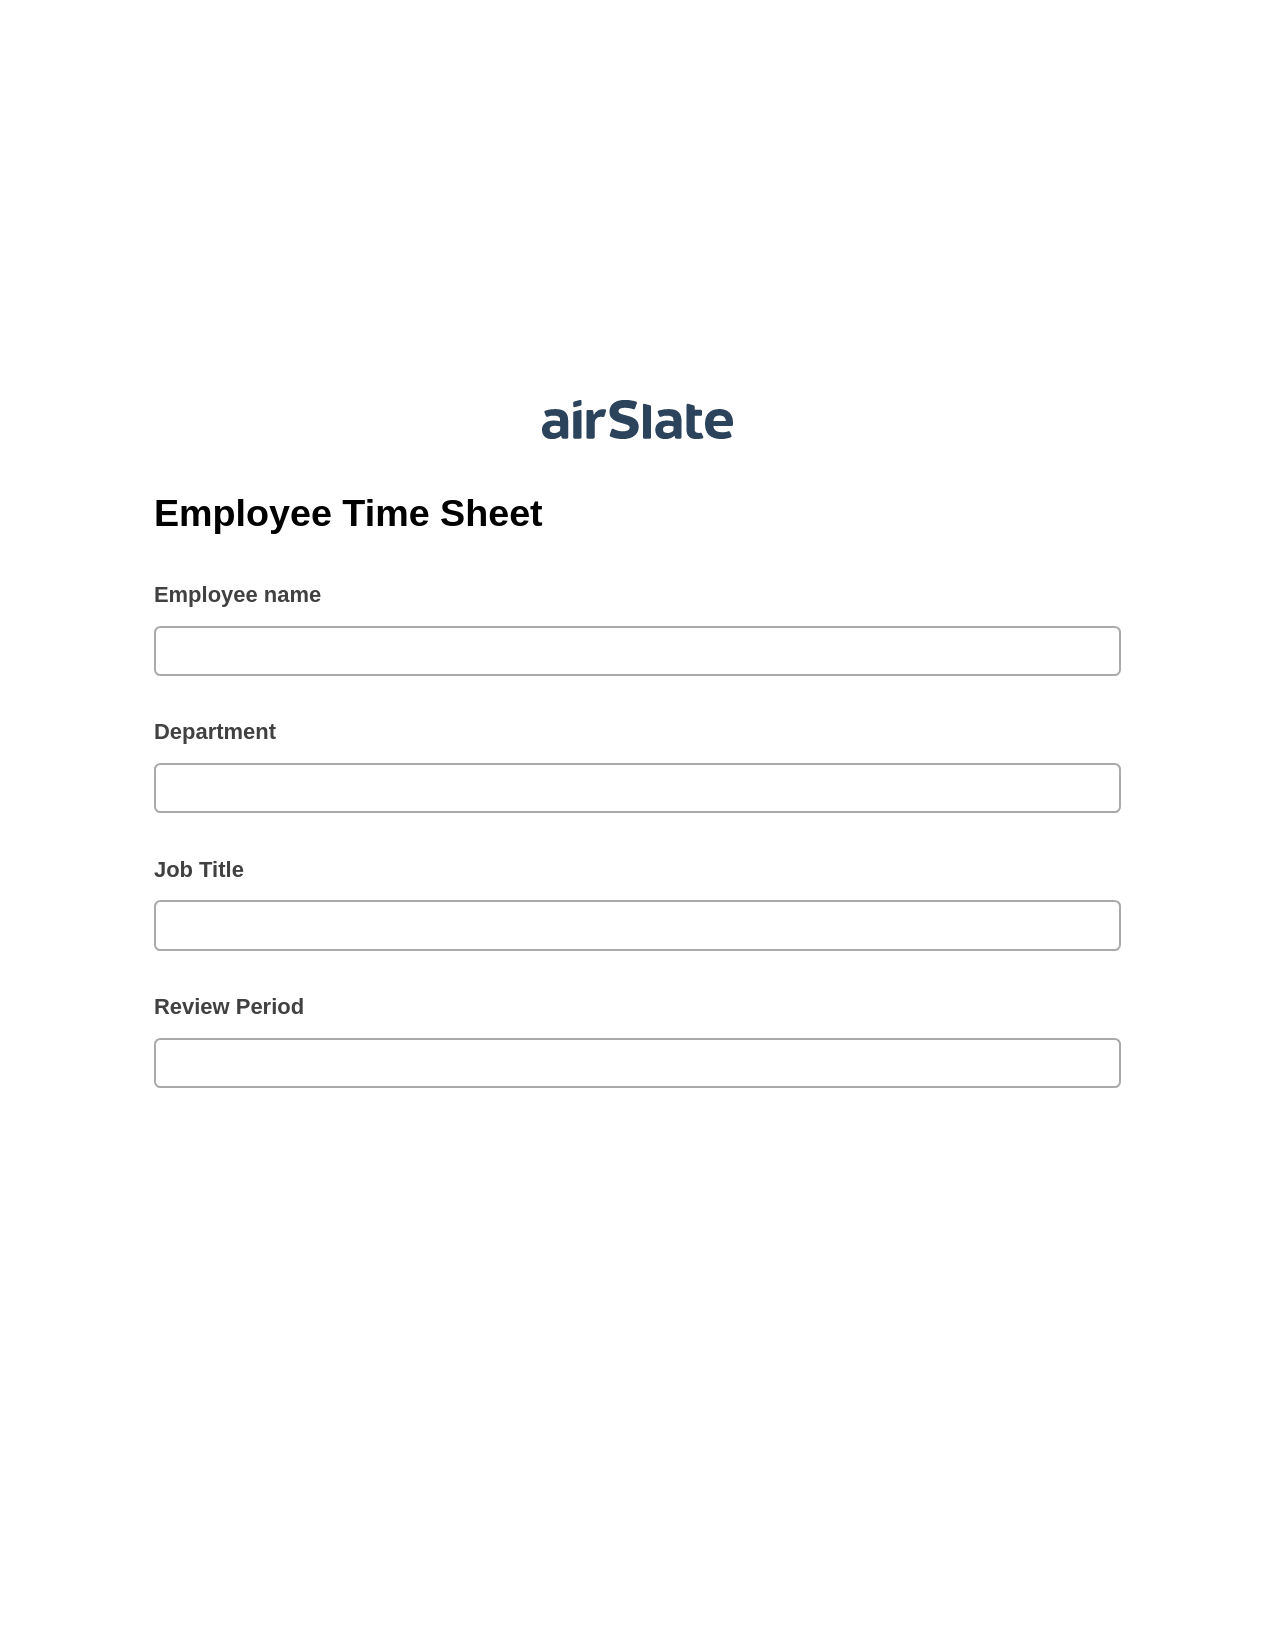 Employee Time Sheet Pre-fill from Salesforce Records Bot, Create slate addon, Slack Two-Way Binding Bot